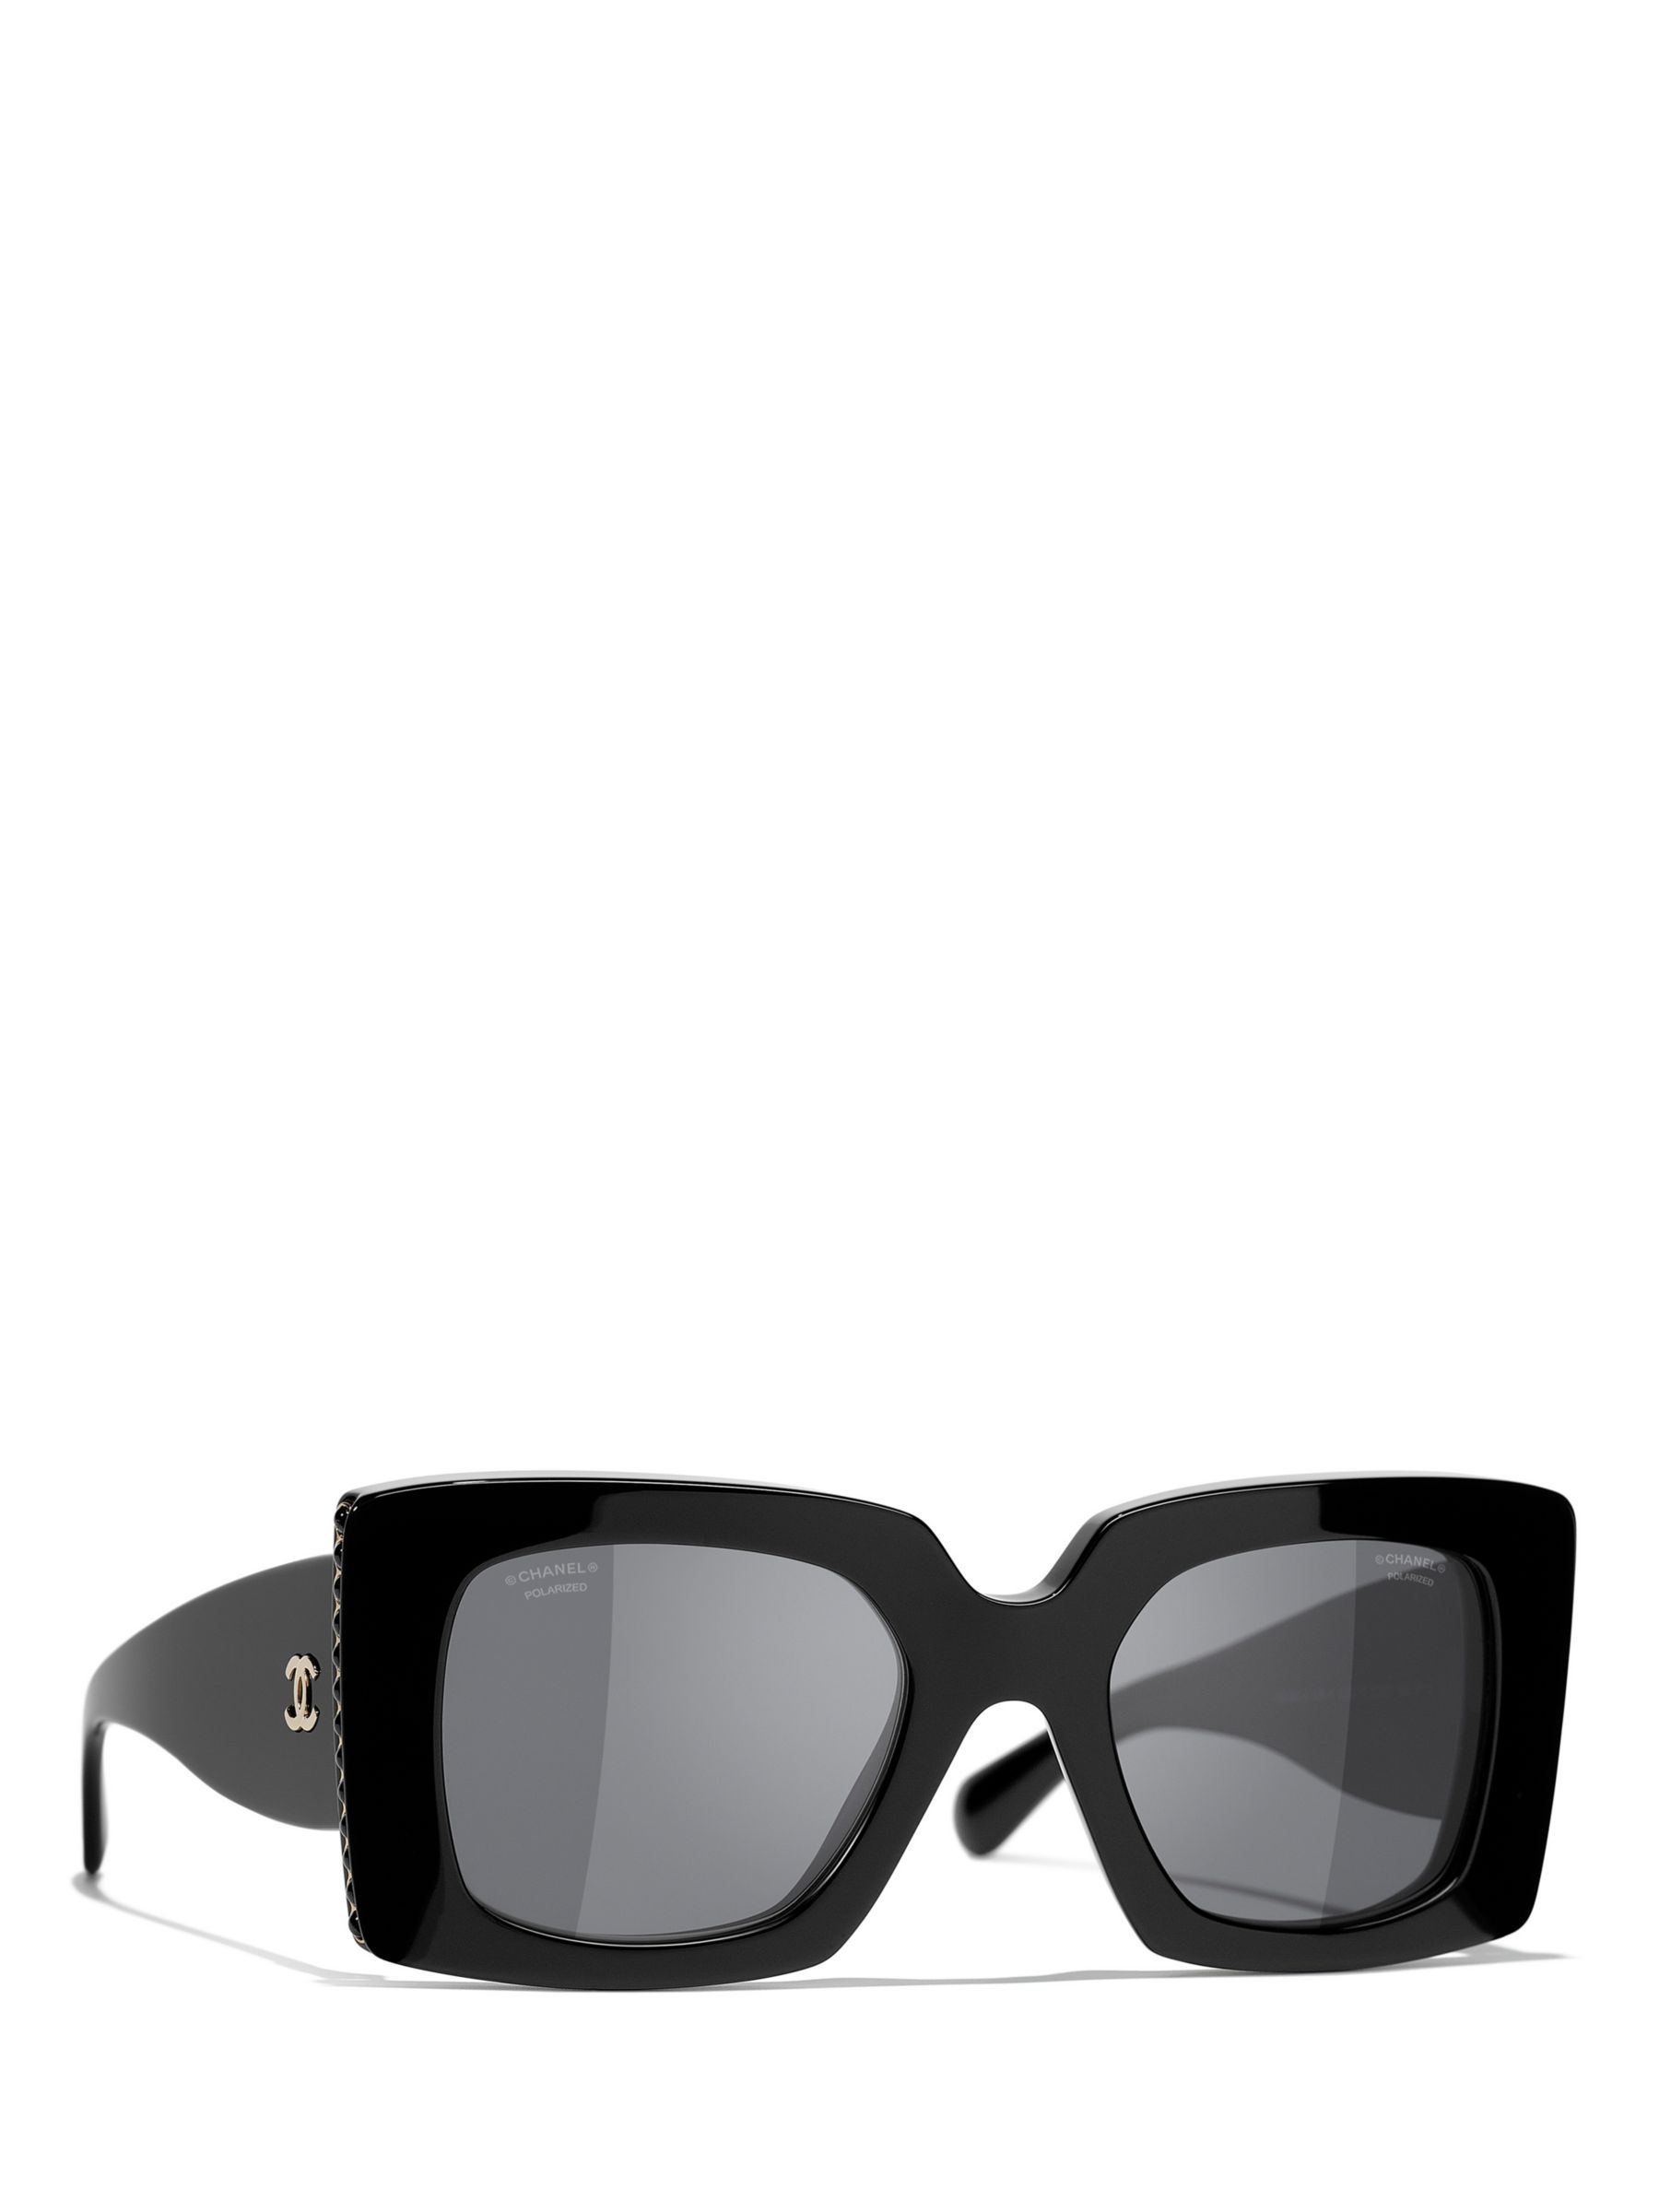 CHANEL Rectangular Sunglasses CH5480H Black/Grey at John Lewis